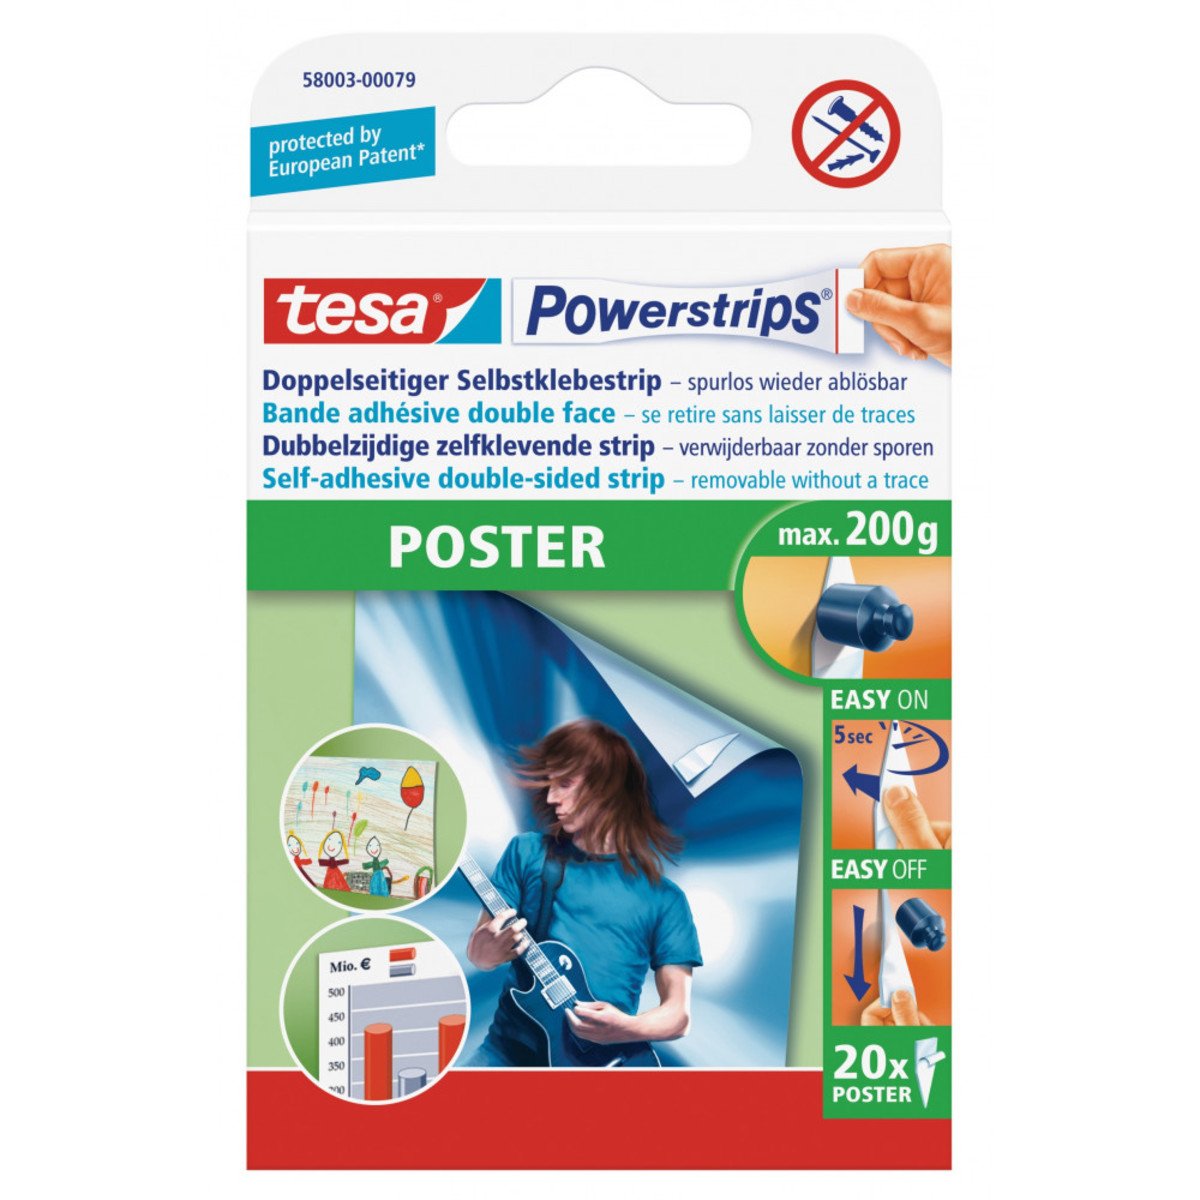 Tesa Powerstripes Poster + 20% 5x Pck. value pack